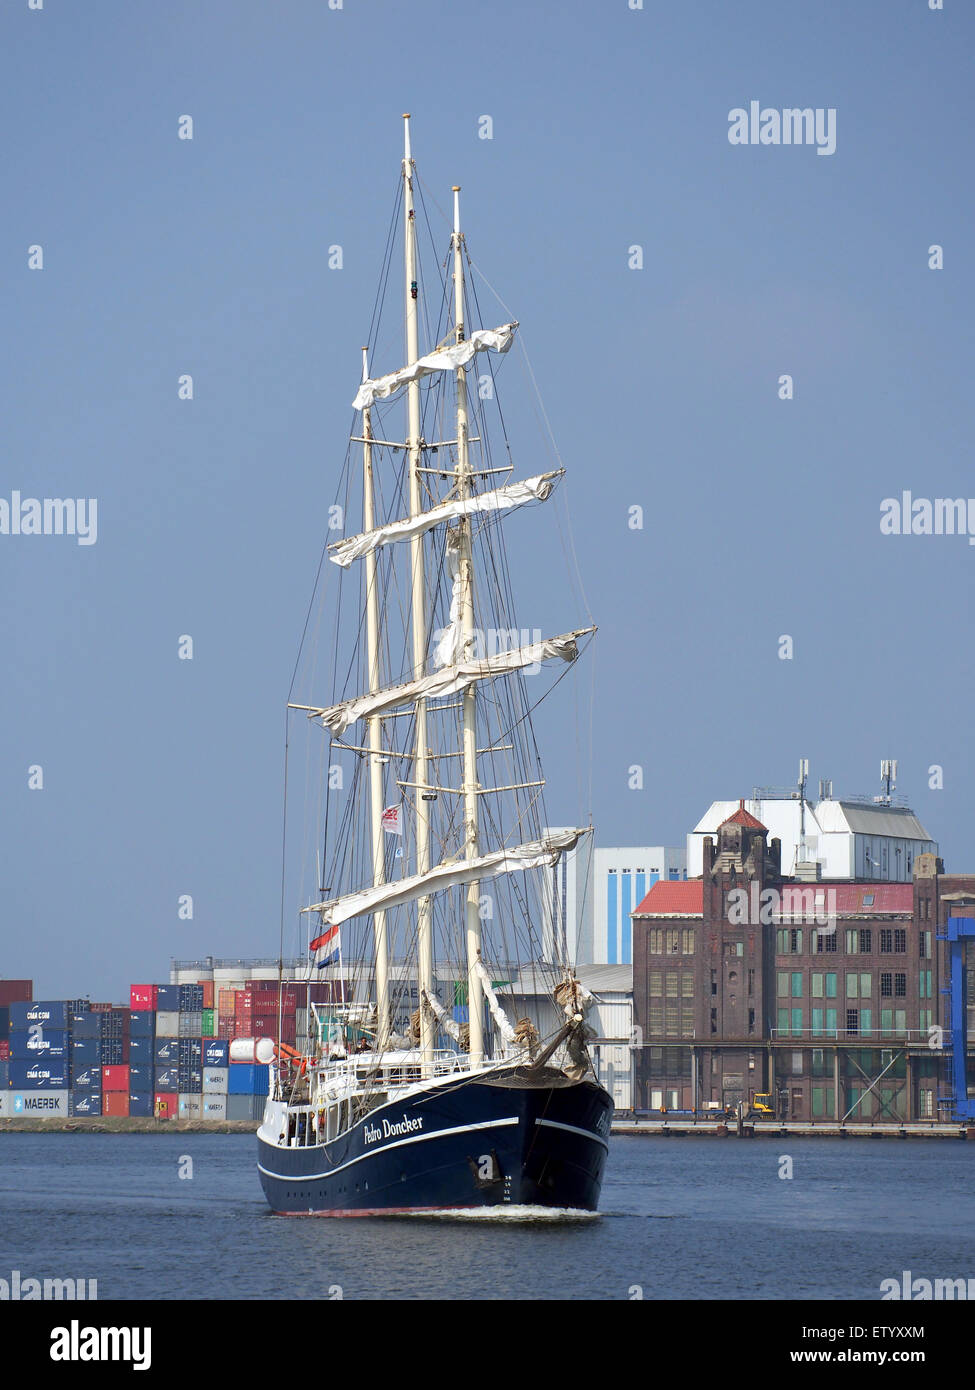 PEDRO DONCKER, IMO 8136154, Noordzeekanaal, Port of Amsterdam, pic2 Stock Photo